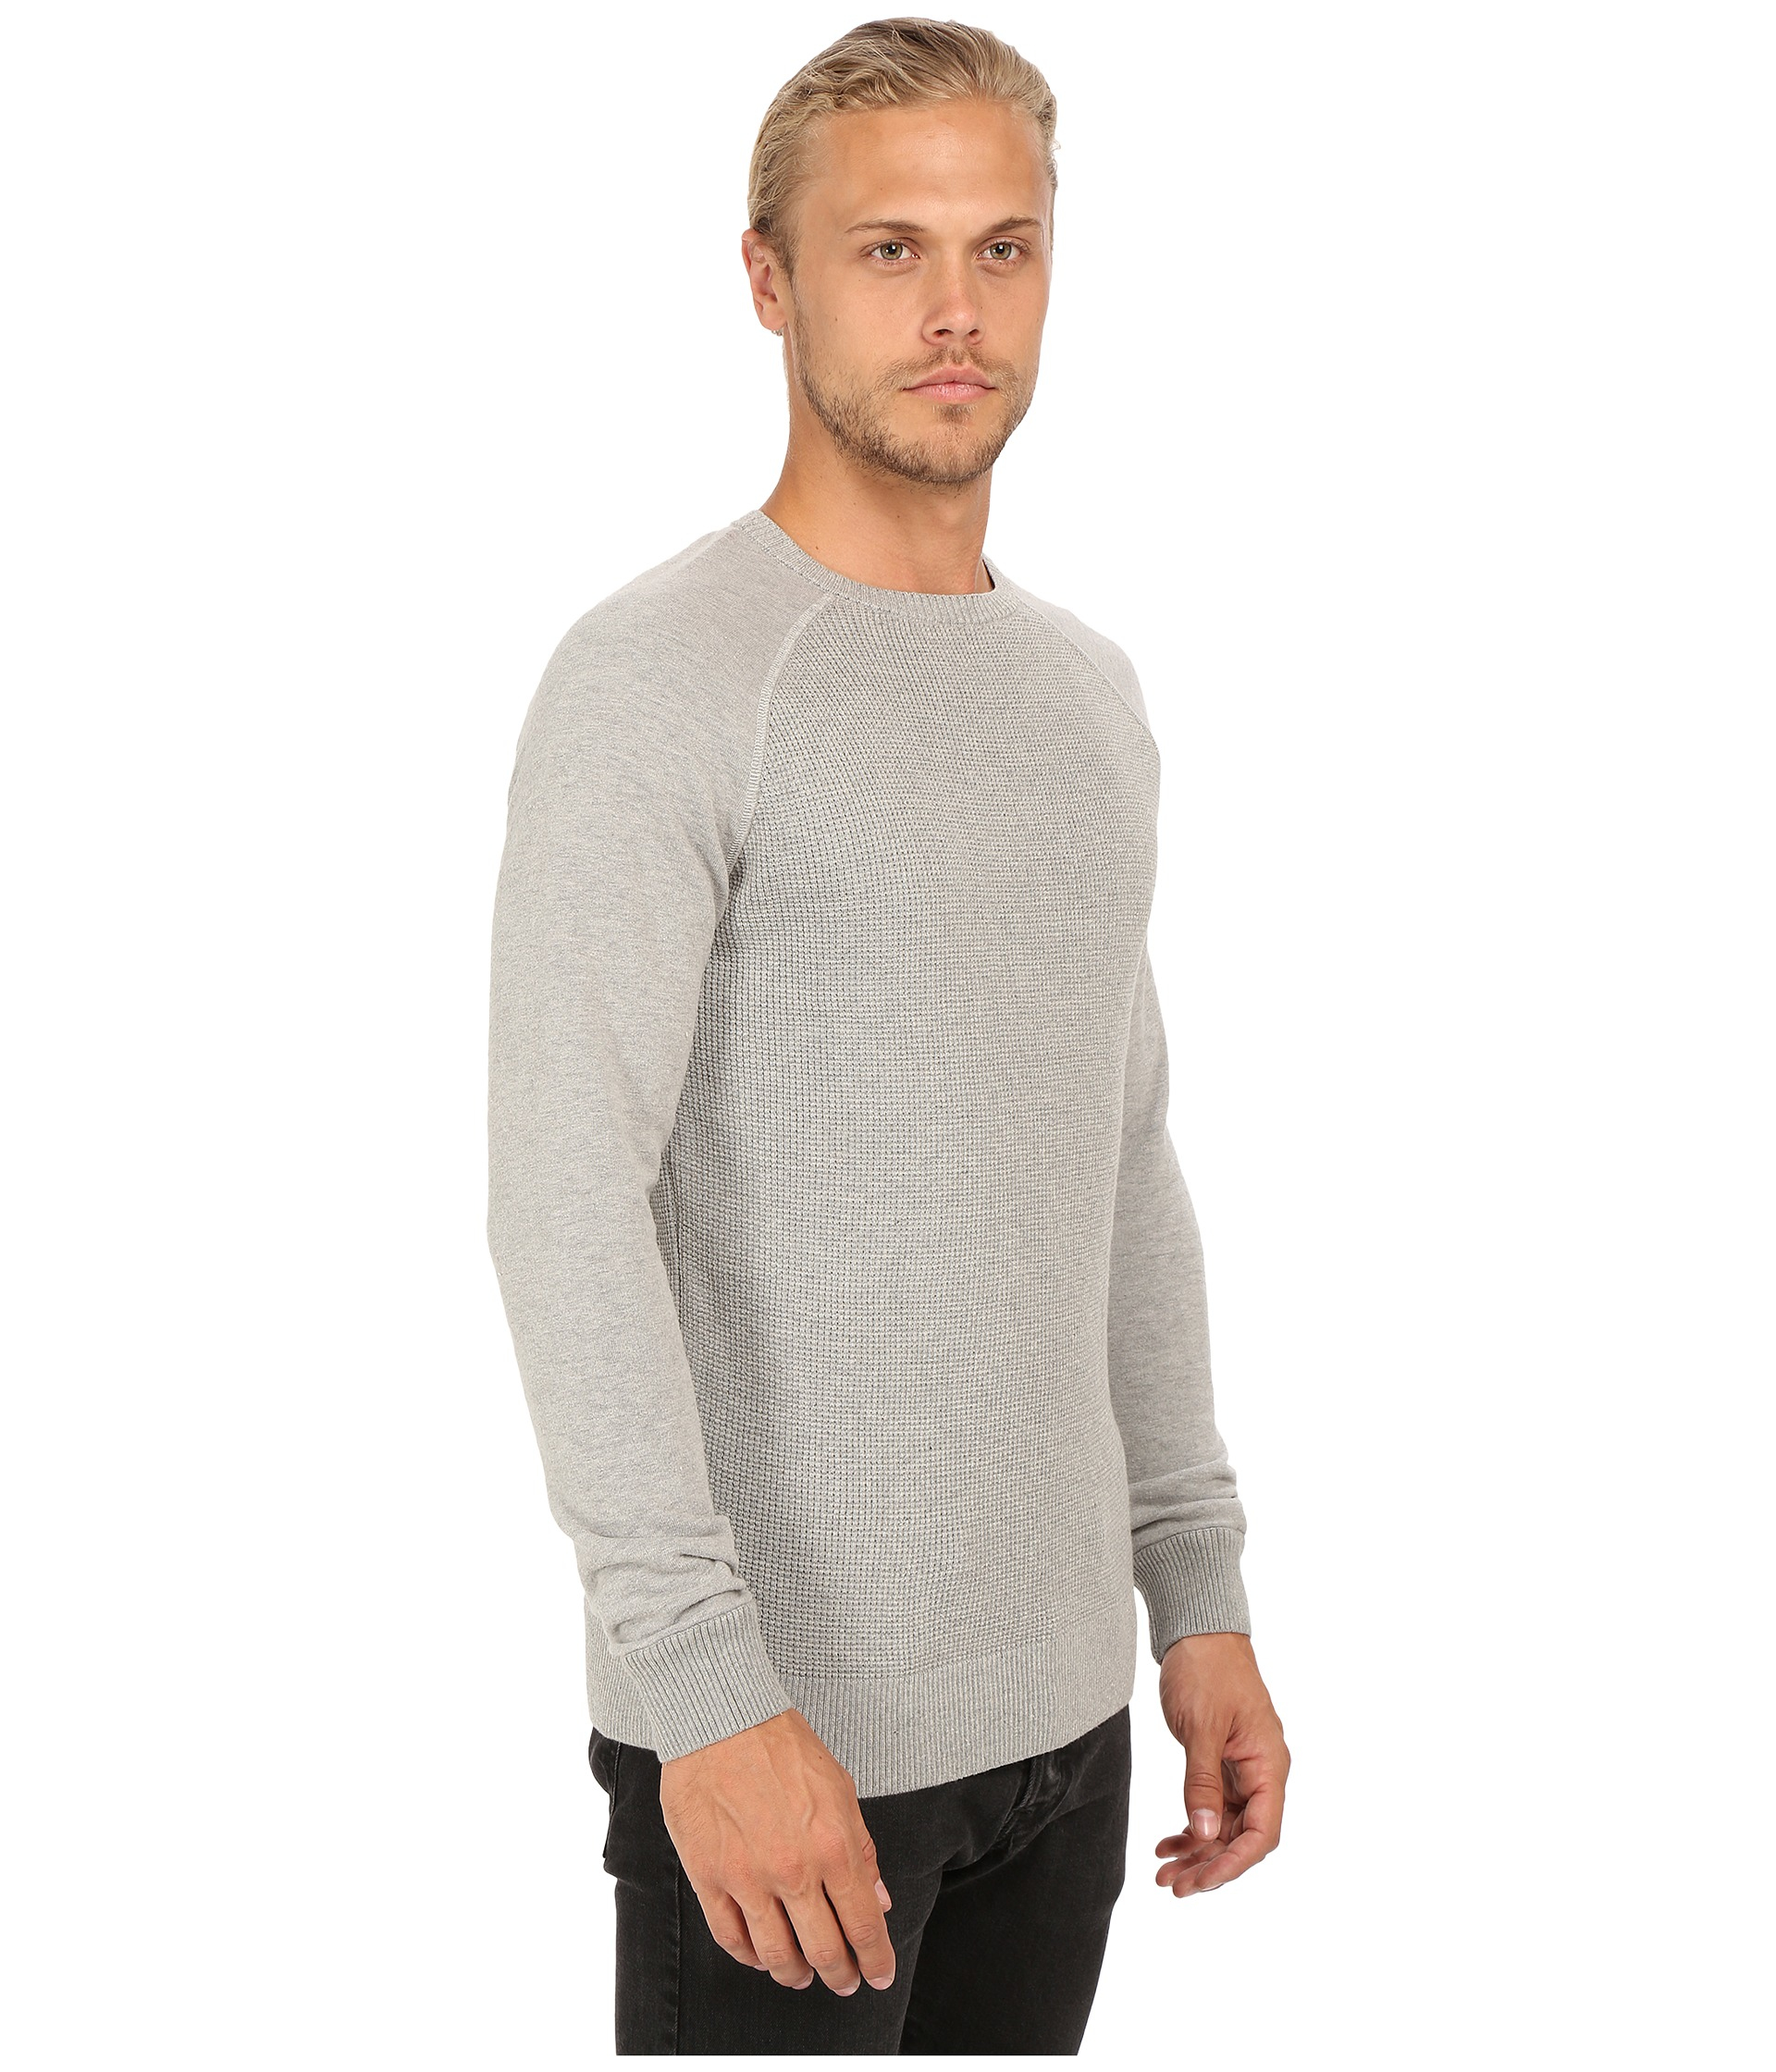 Lyst - Mavi jeans Crew Neck Sweater in Gray for Men